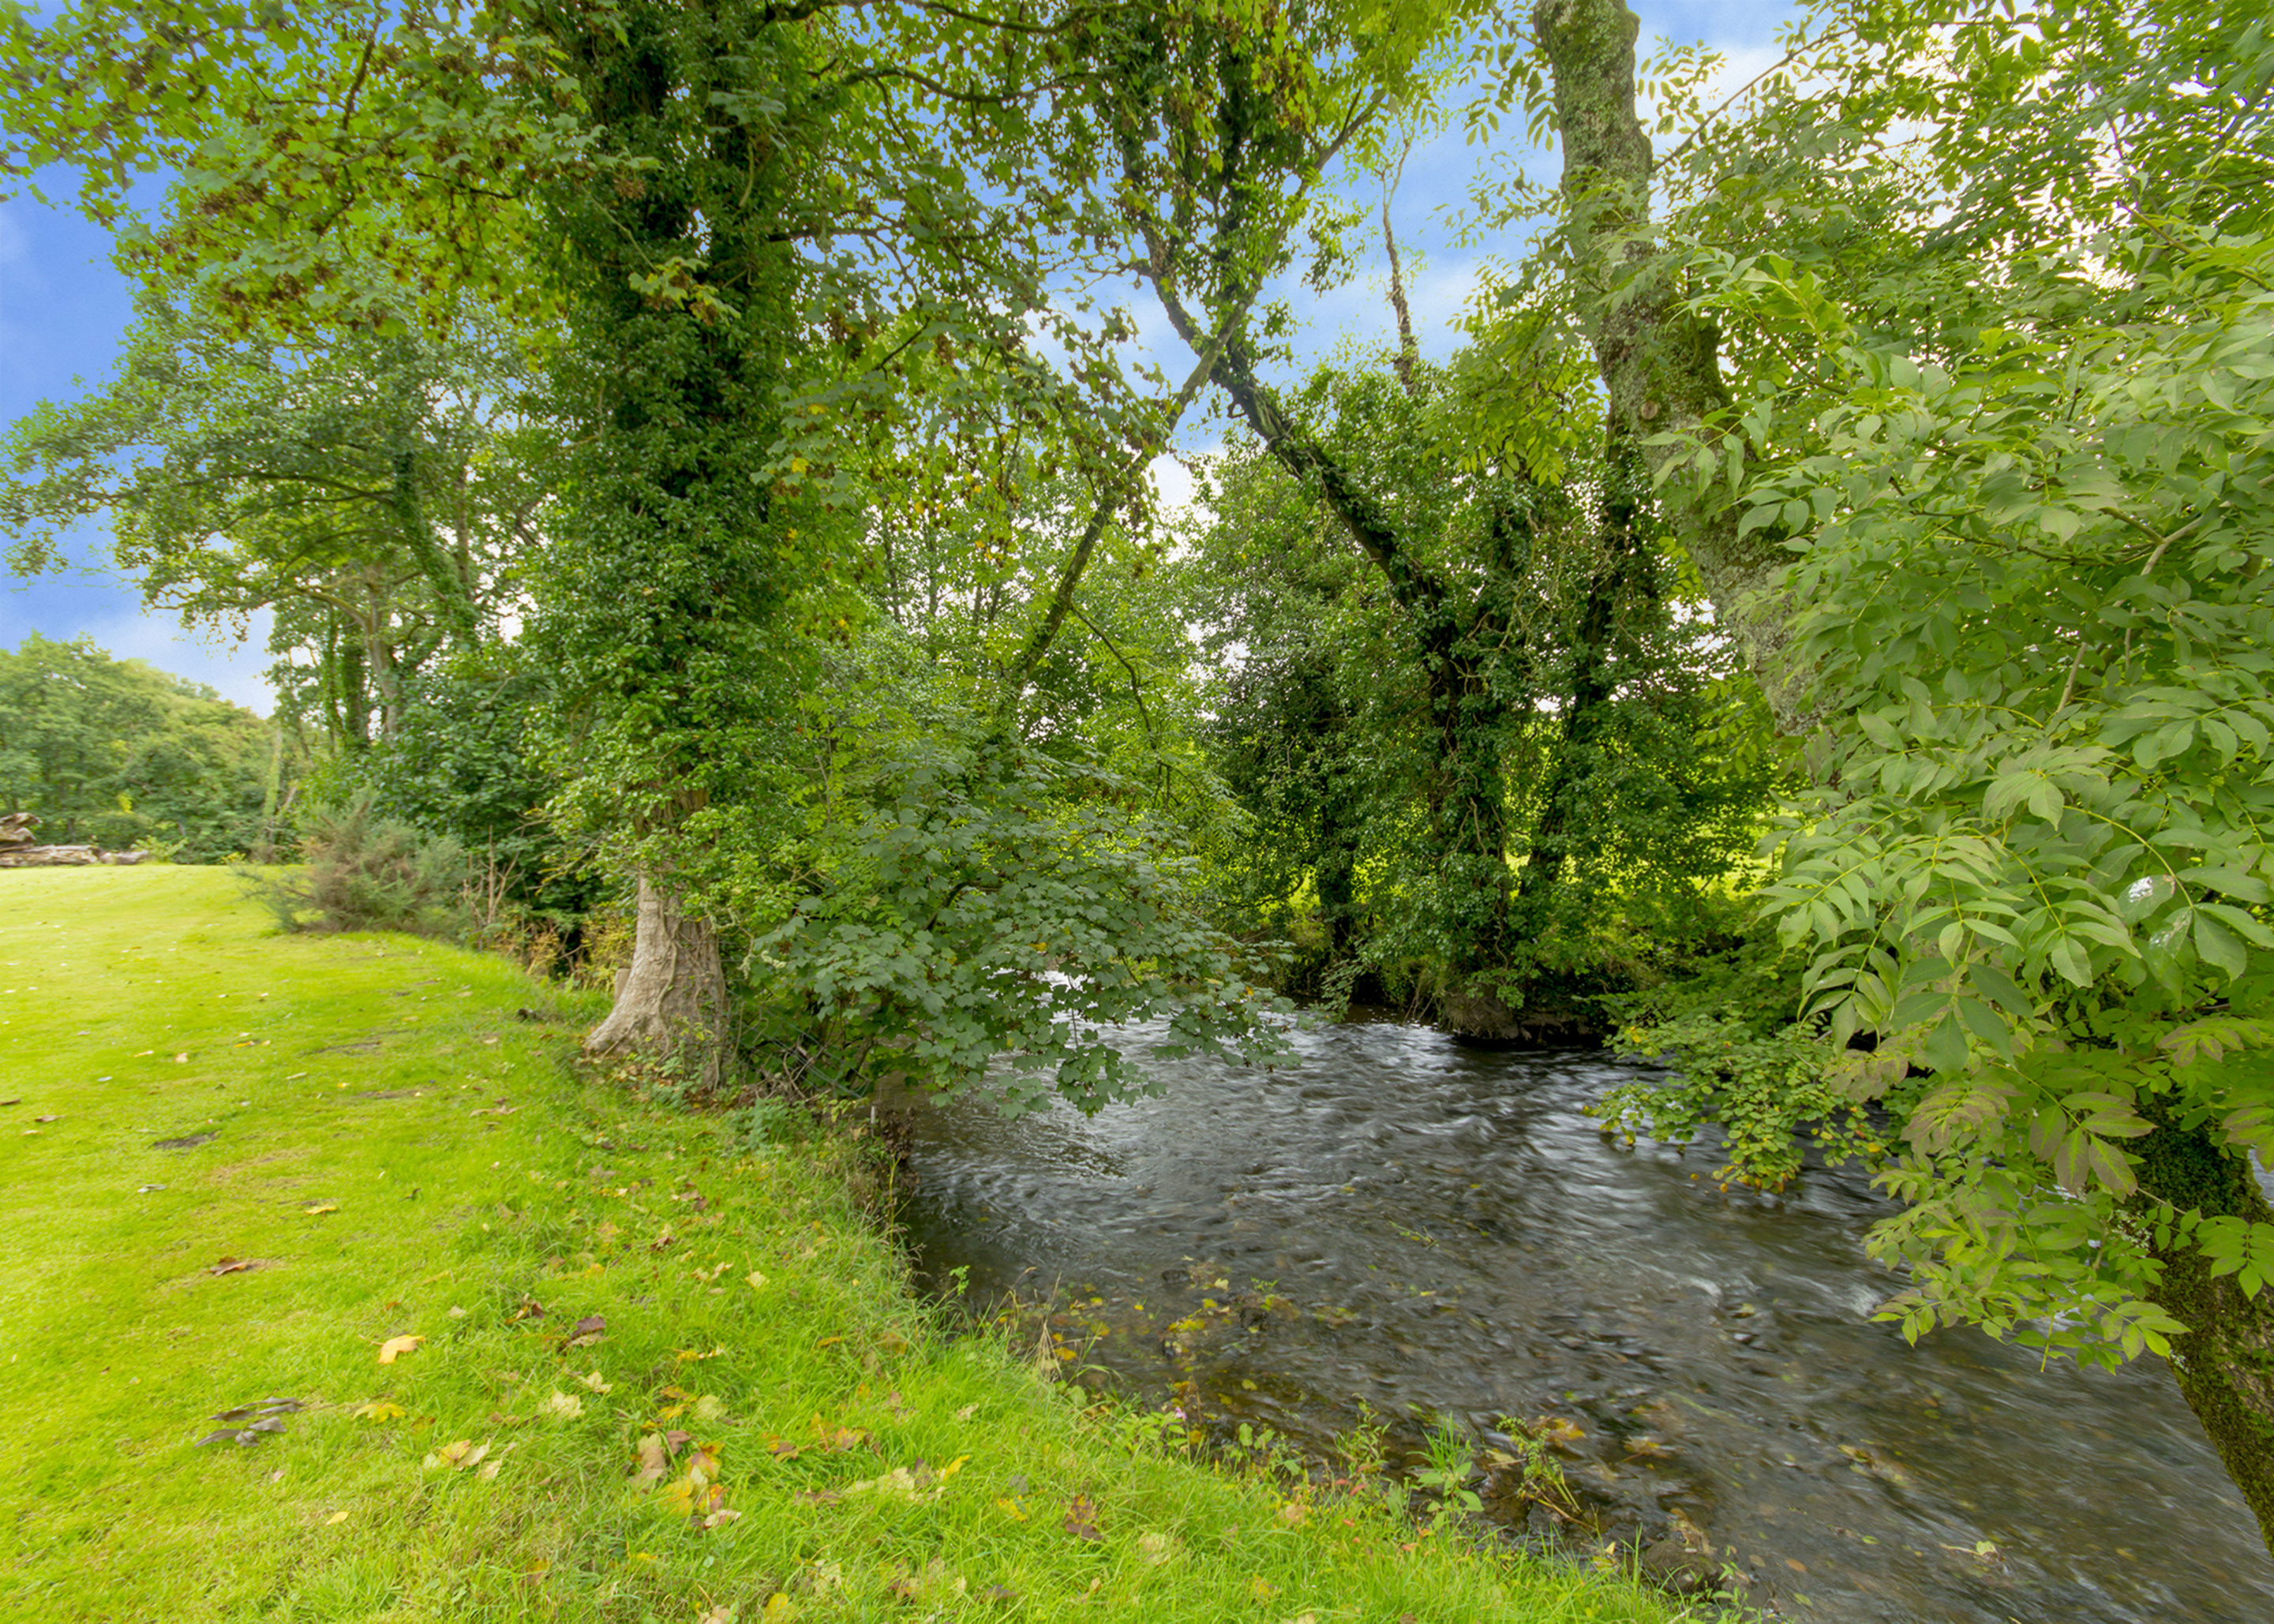 The Cammarch River runs around the gardens